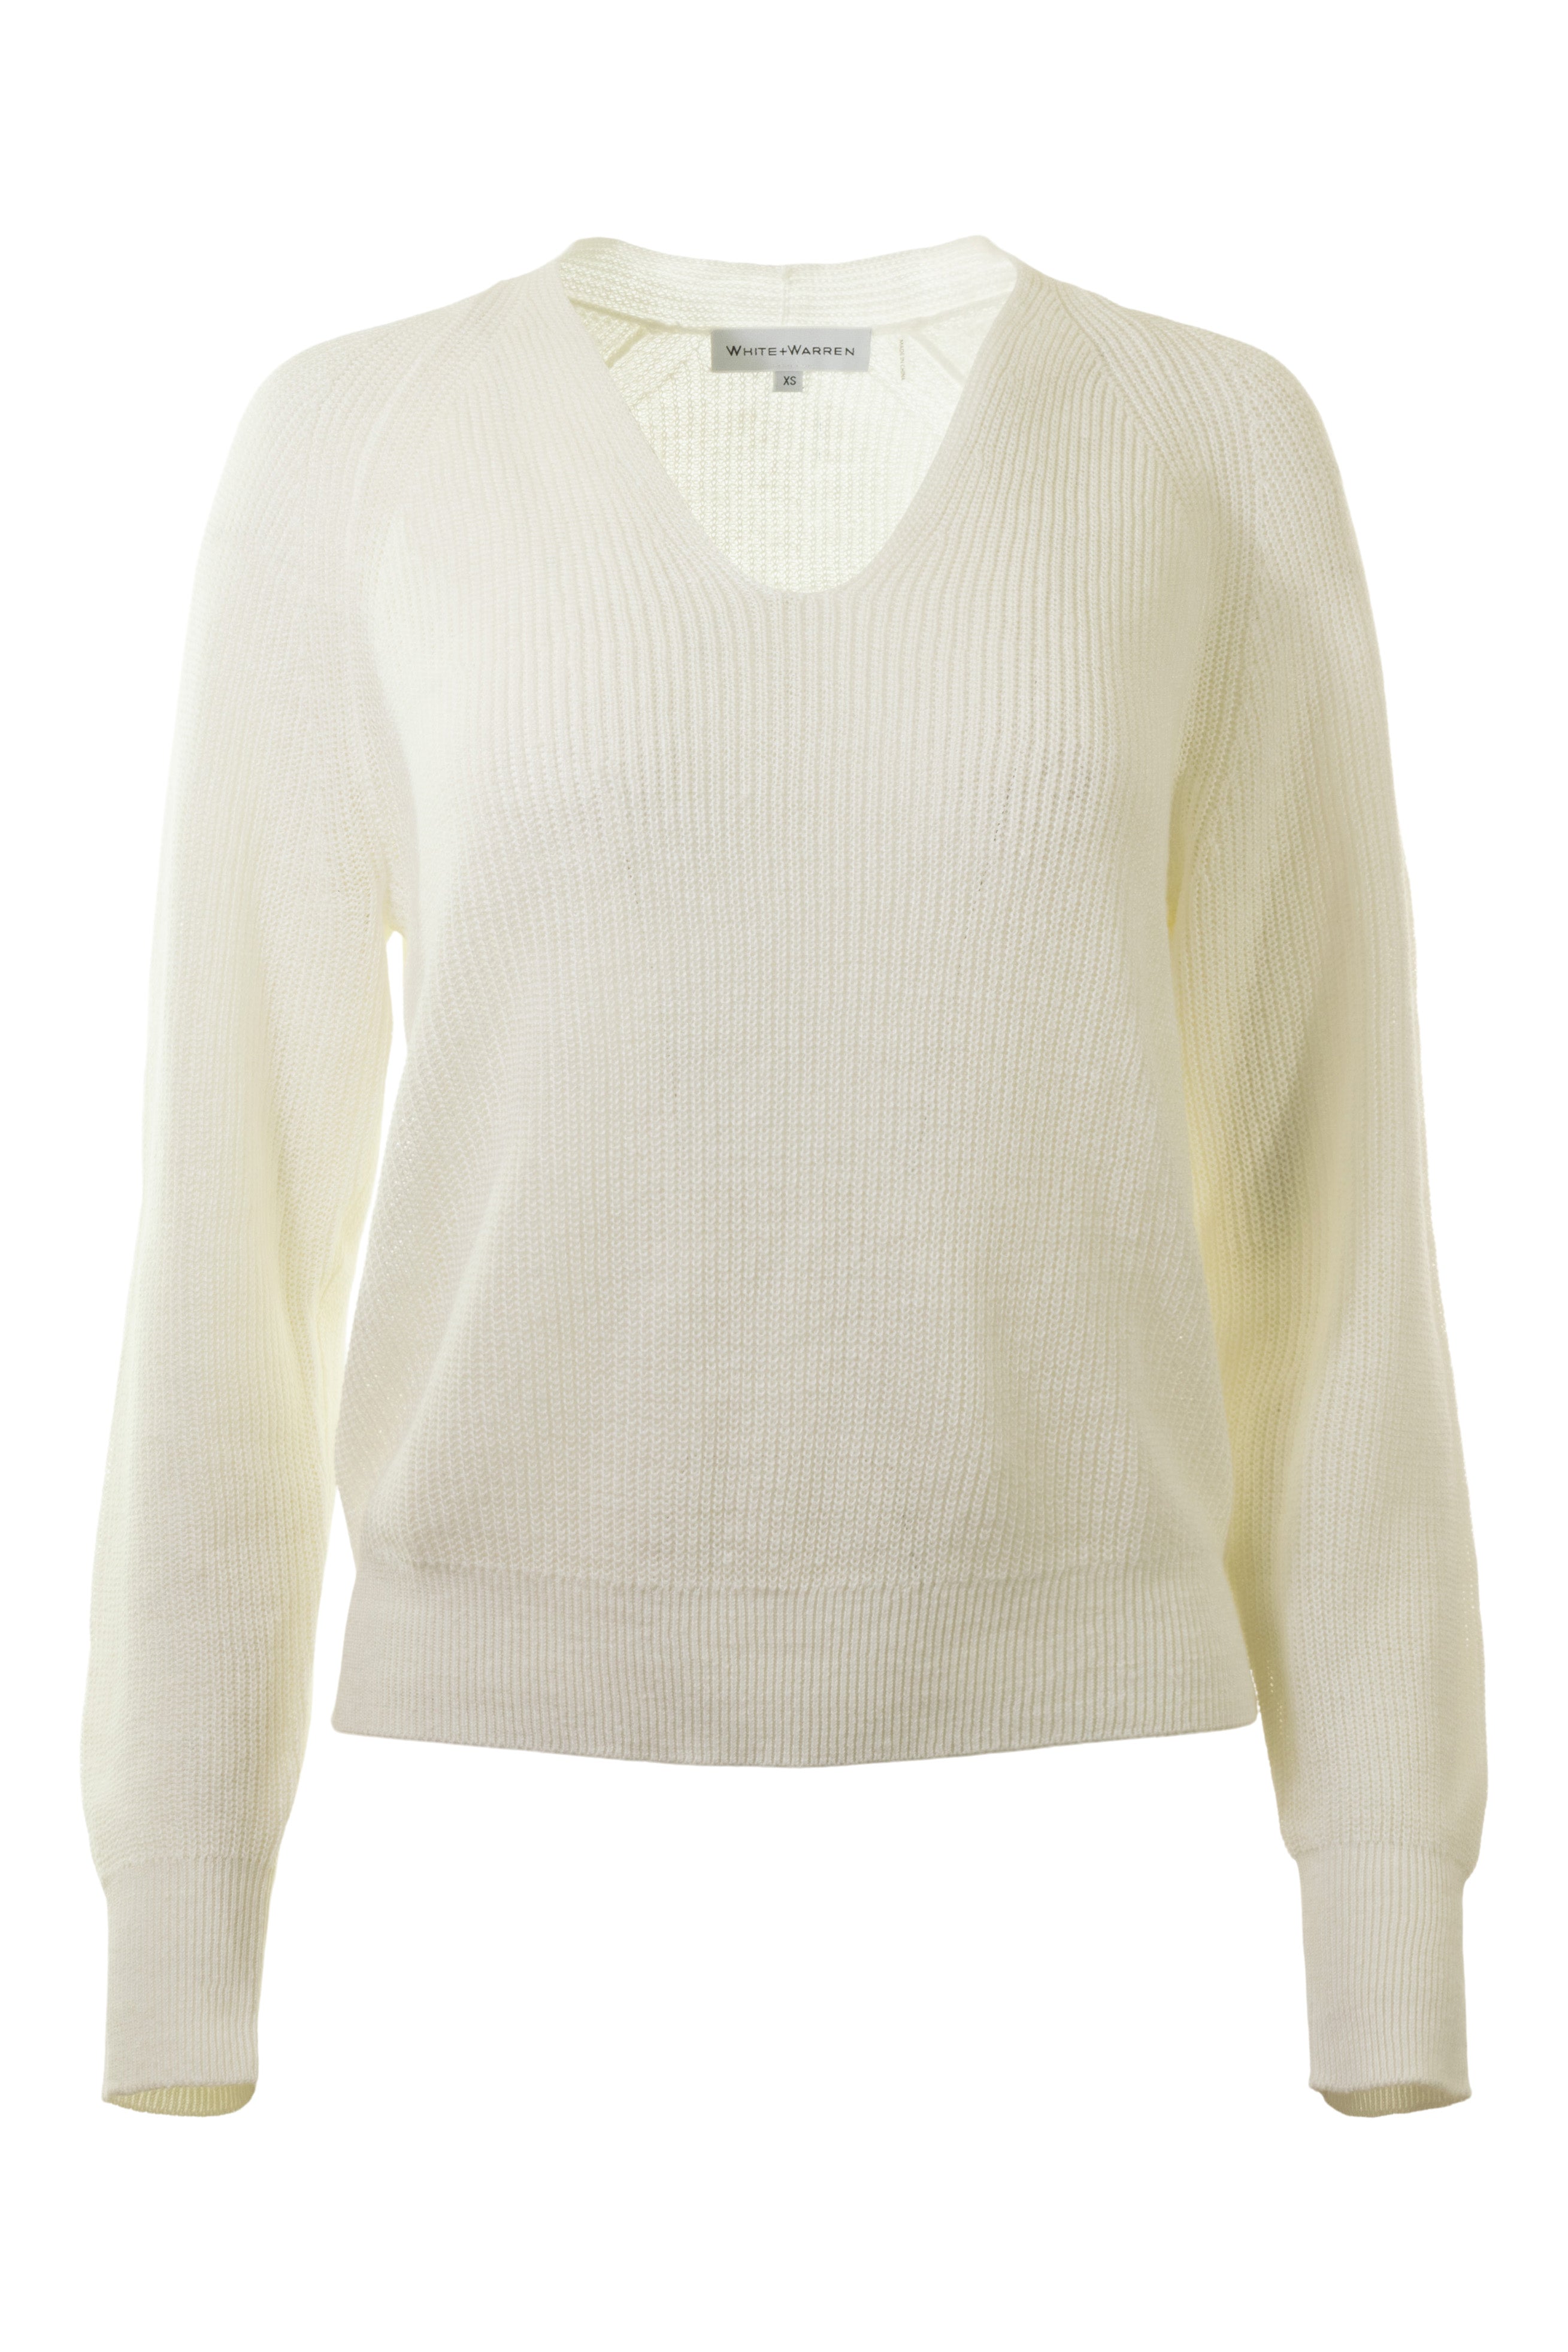 White & Warren Classic Ribbed V-neck Sweater in White